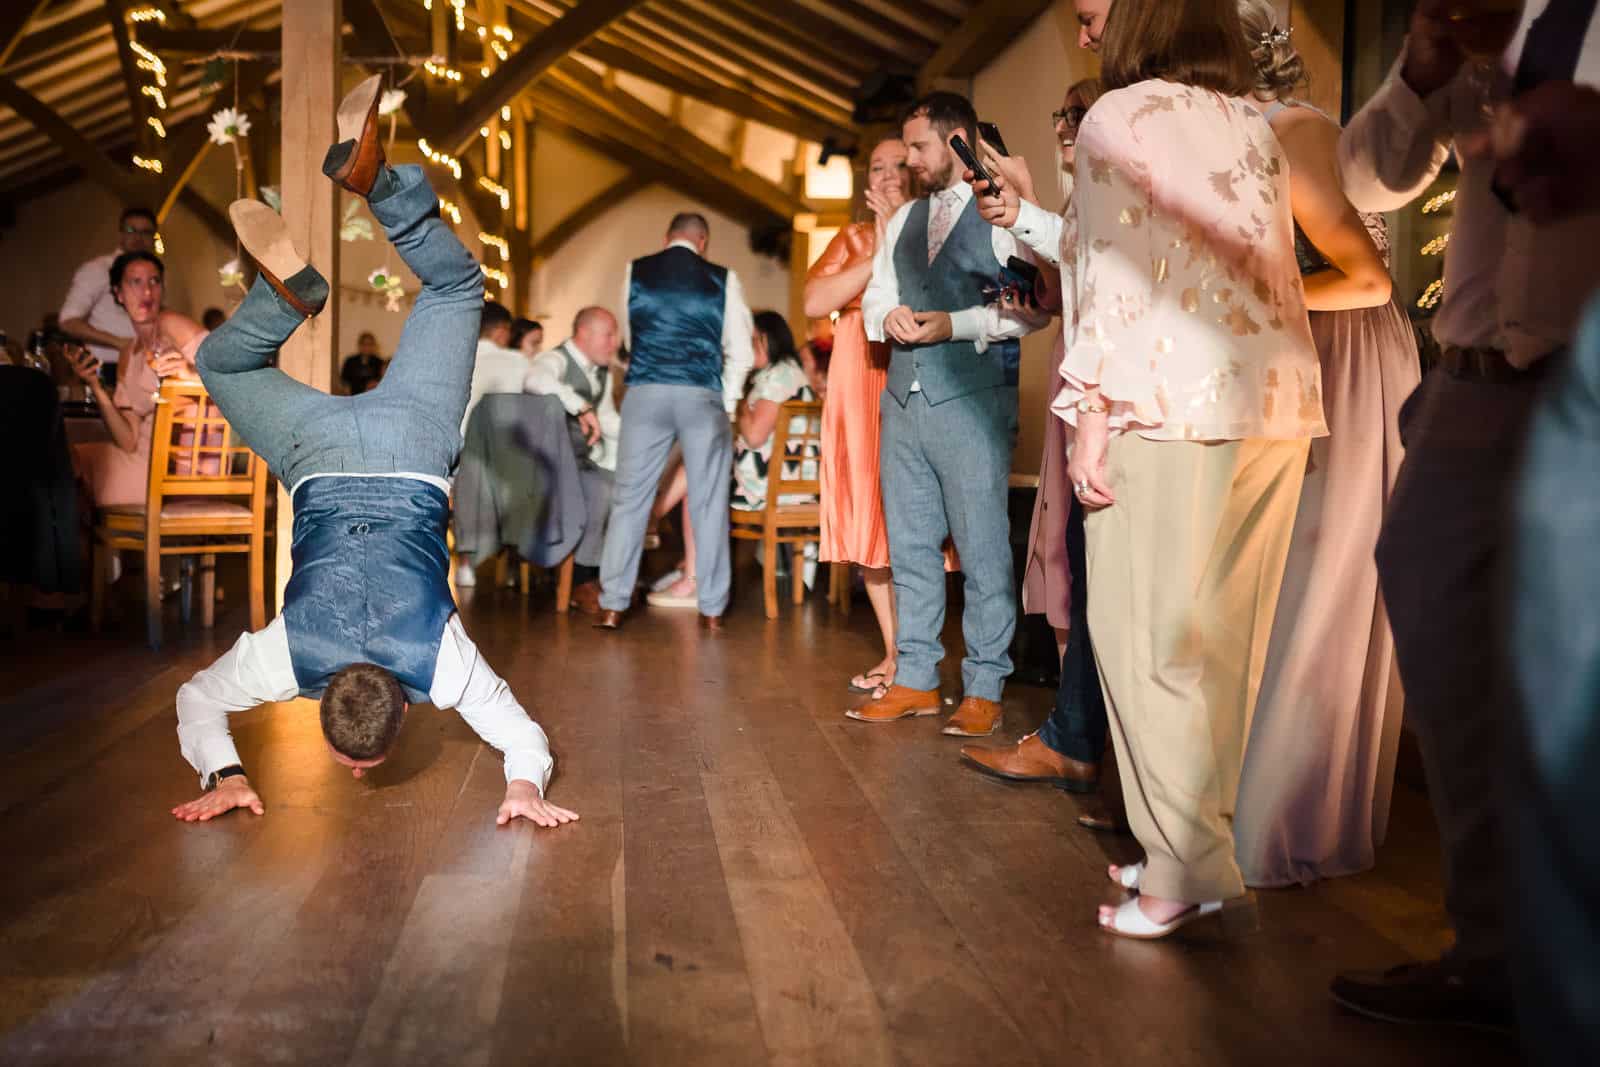 Dance floor worm at a wedding